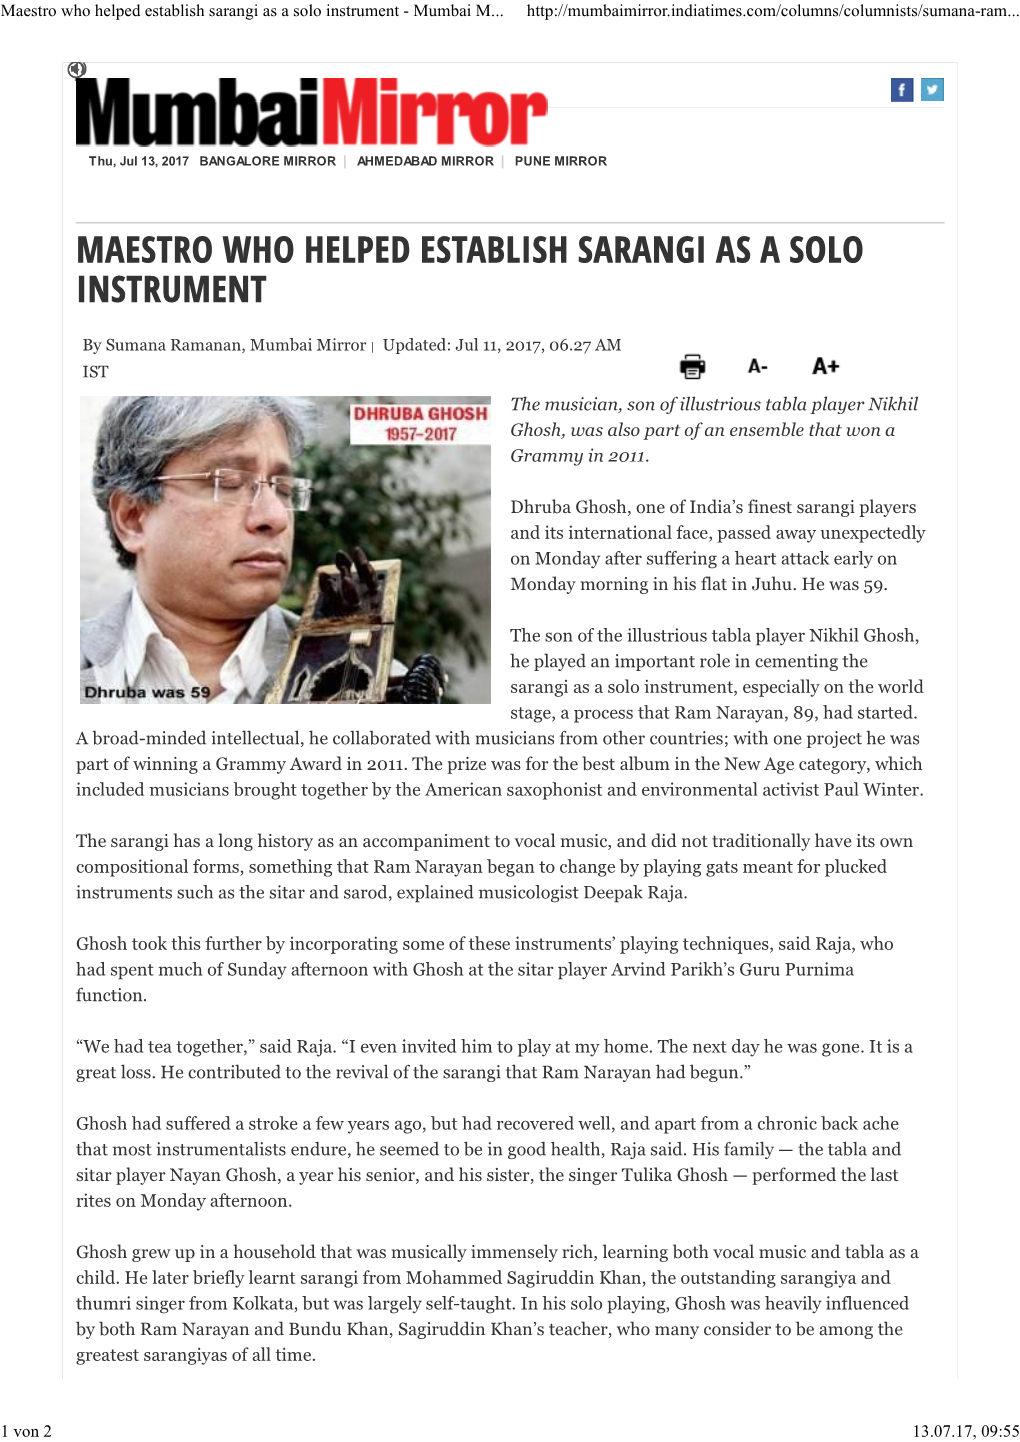 Maestro Who Helped Establish Sarangi As a Solo Instrument - Mumbai M